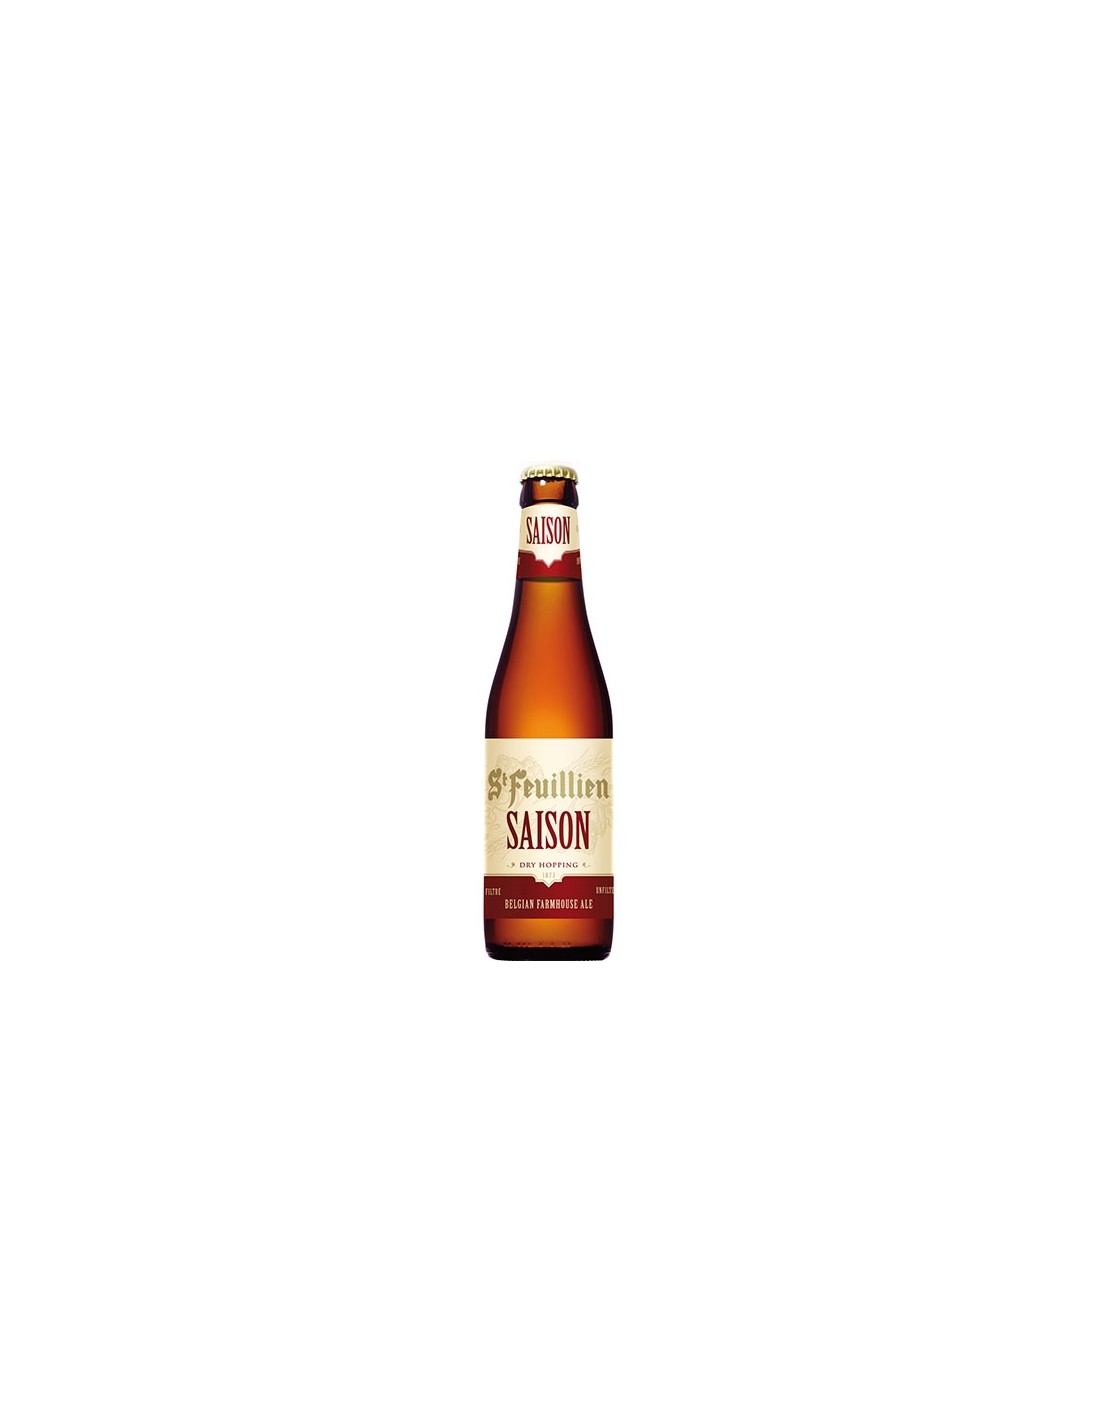 Bere blonda St Feuillien Saison, 6.5% alc., 0.33L, Belgia alcooldiscount.ro